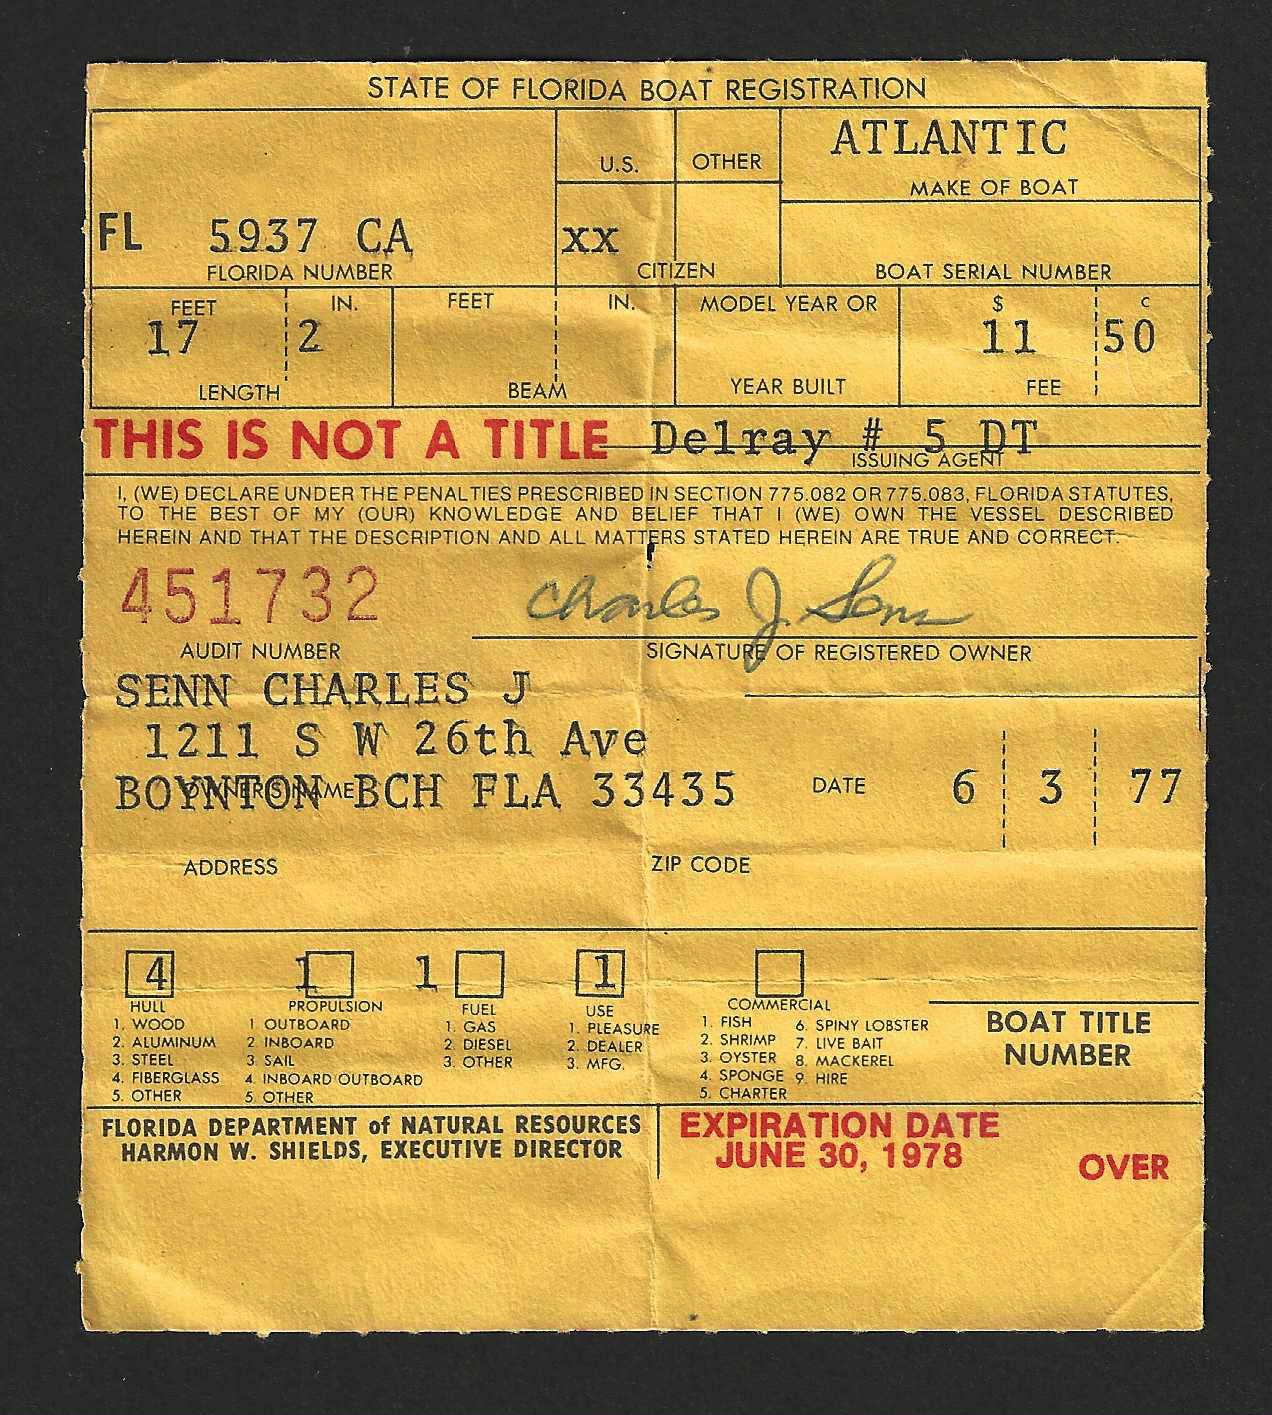 Fl boat registration form 1977-1978 heavly folded into quarters